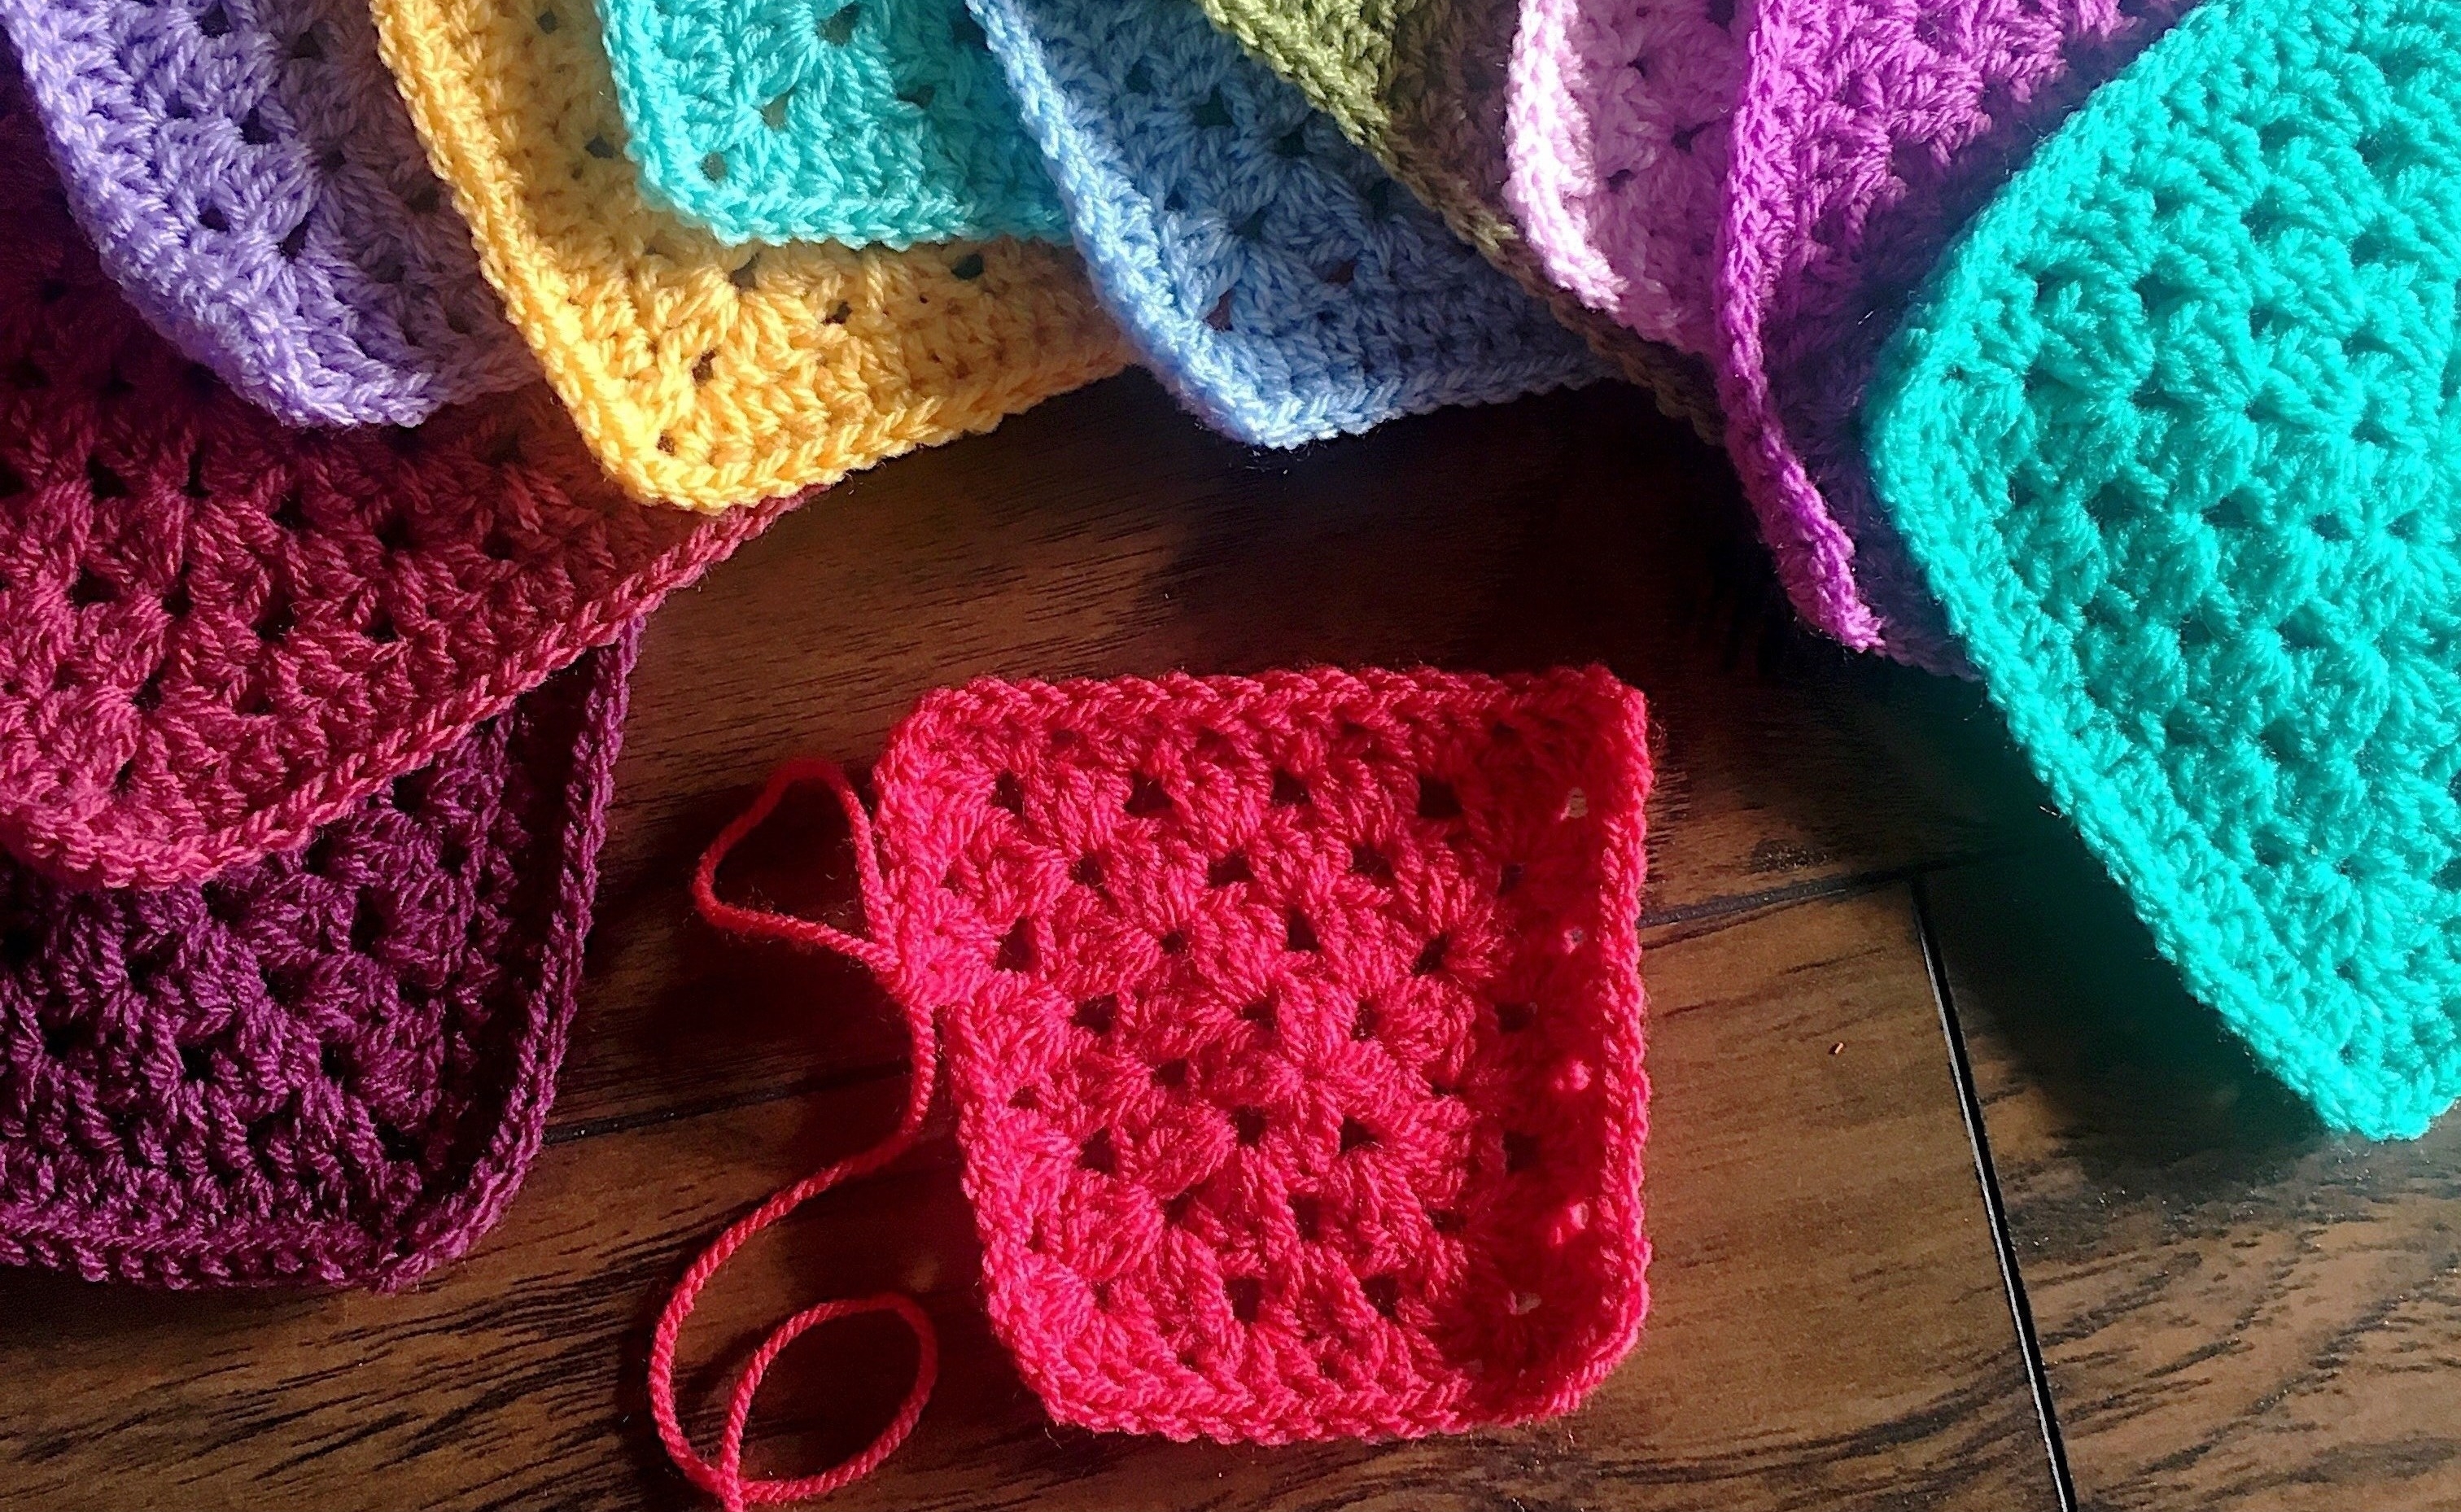 Granny square All in one yarn : r/crochet